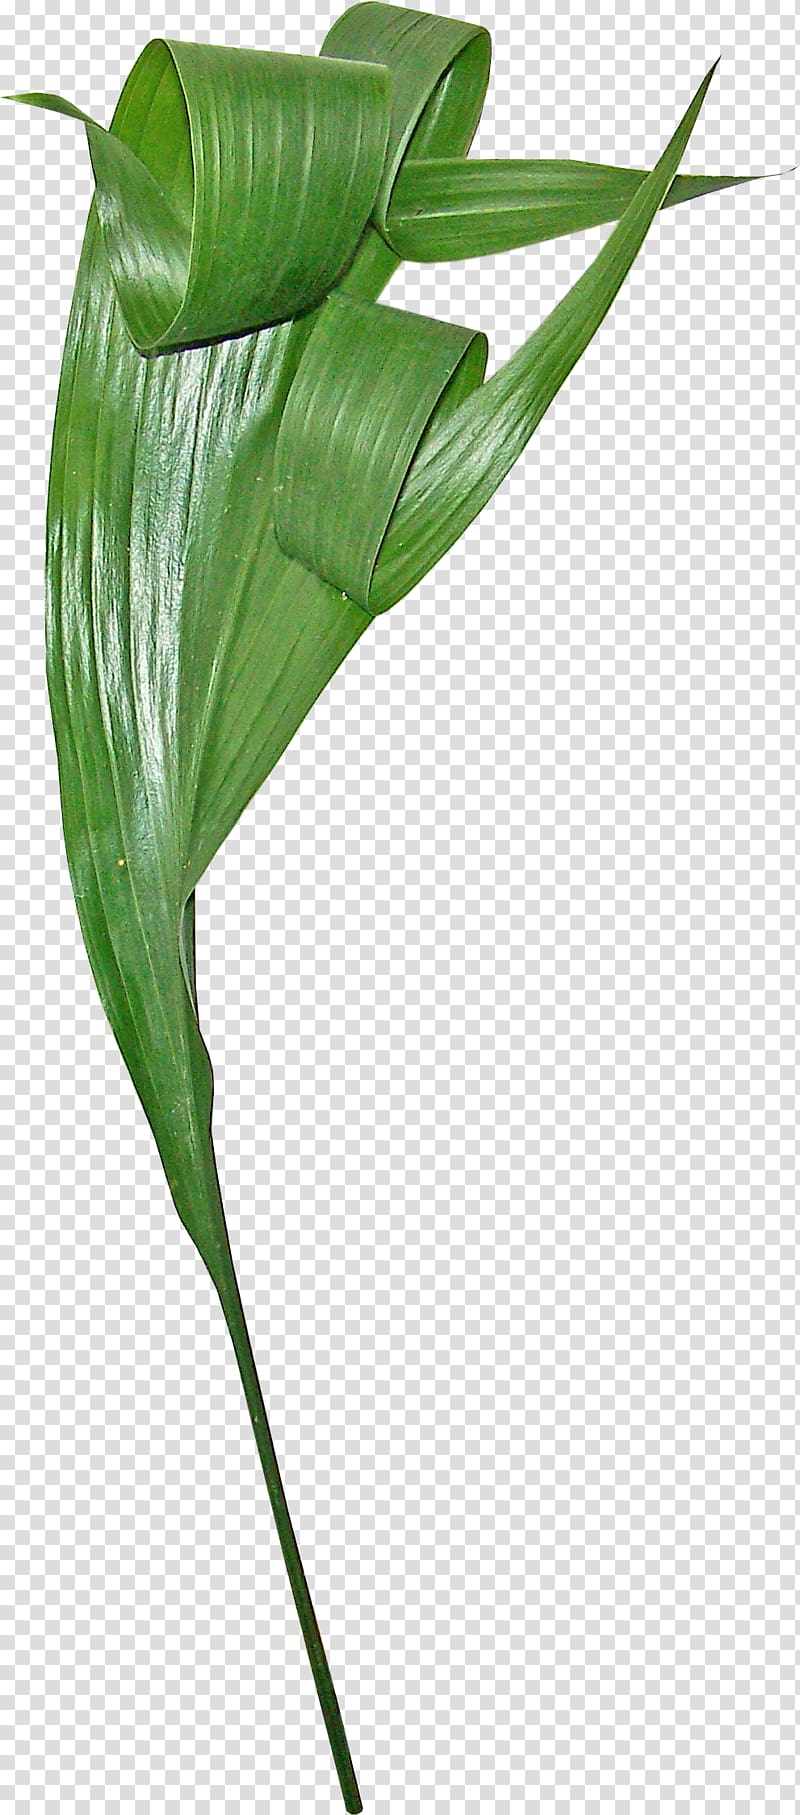 Gratis Euclidean Leaf, Rolled bamboo leaves transparent background PNG clipart